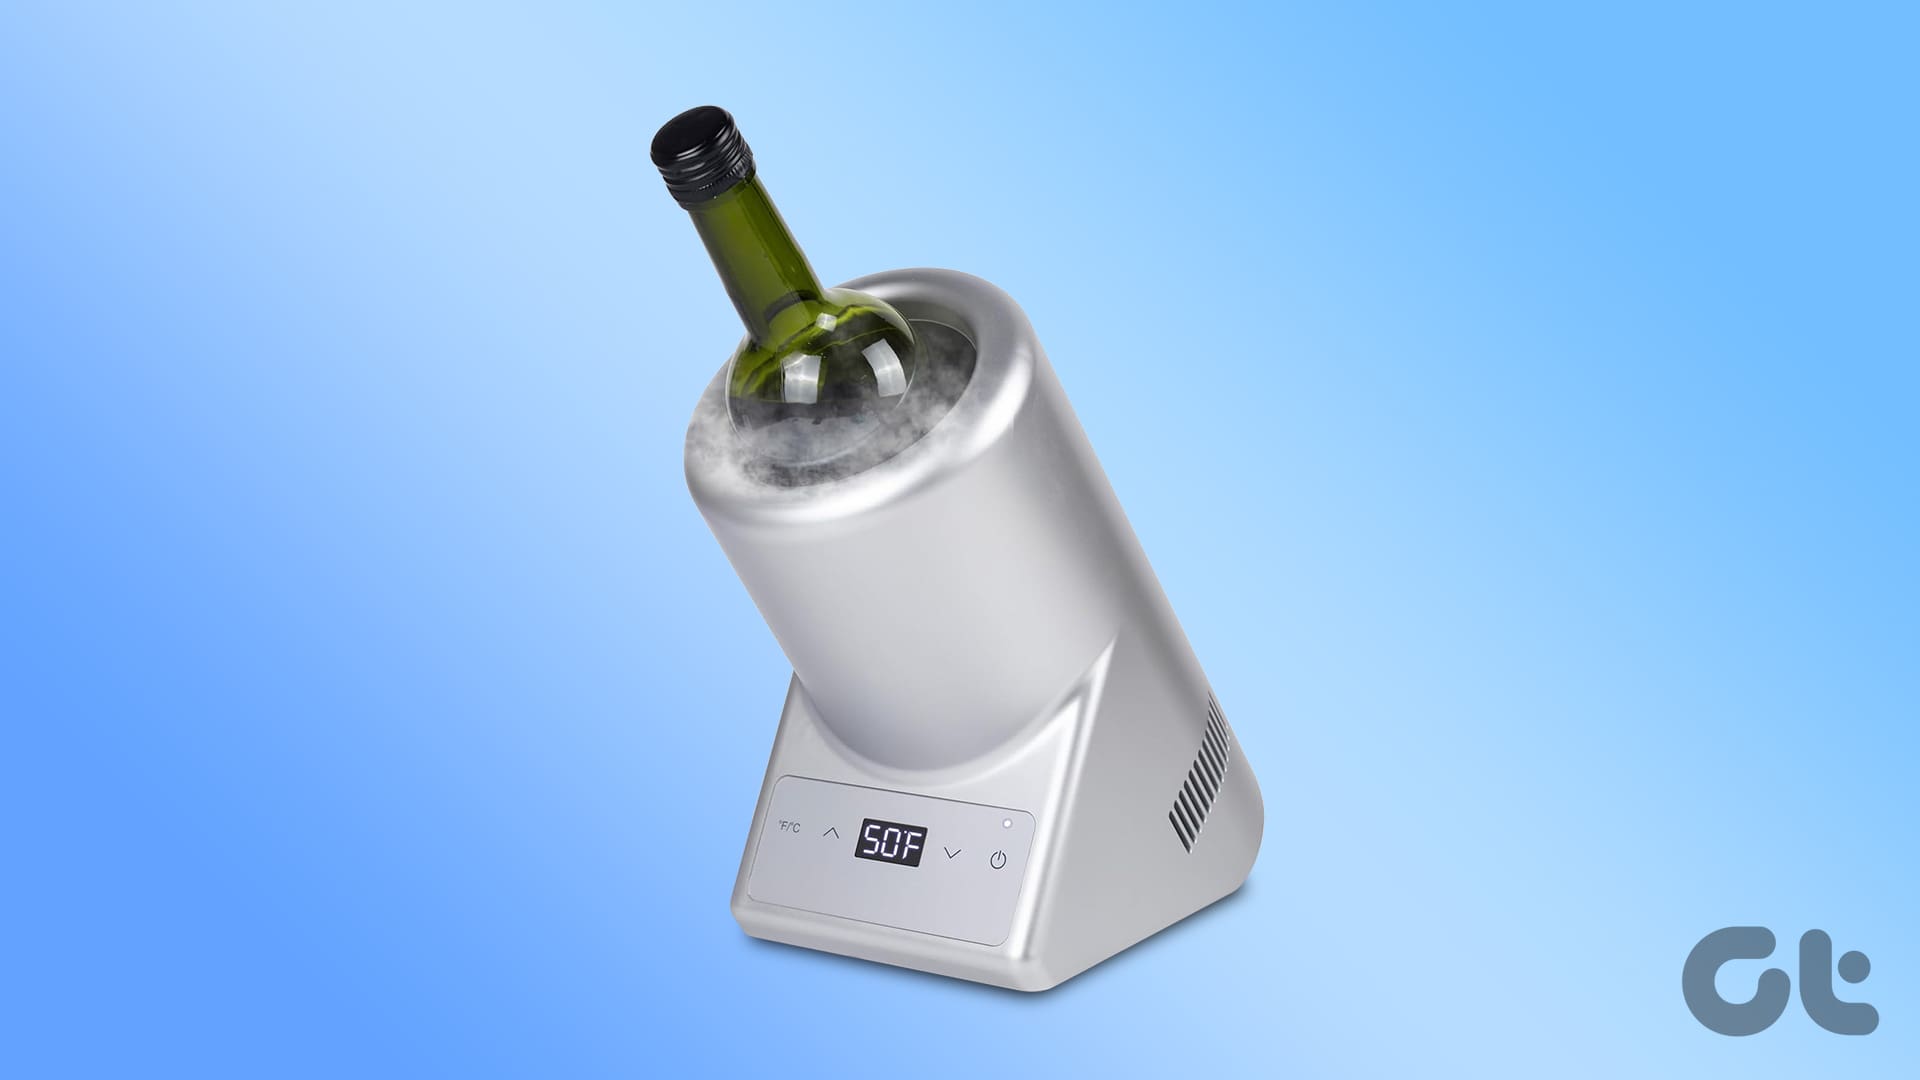 Electric Wine Bottle Chiller